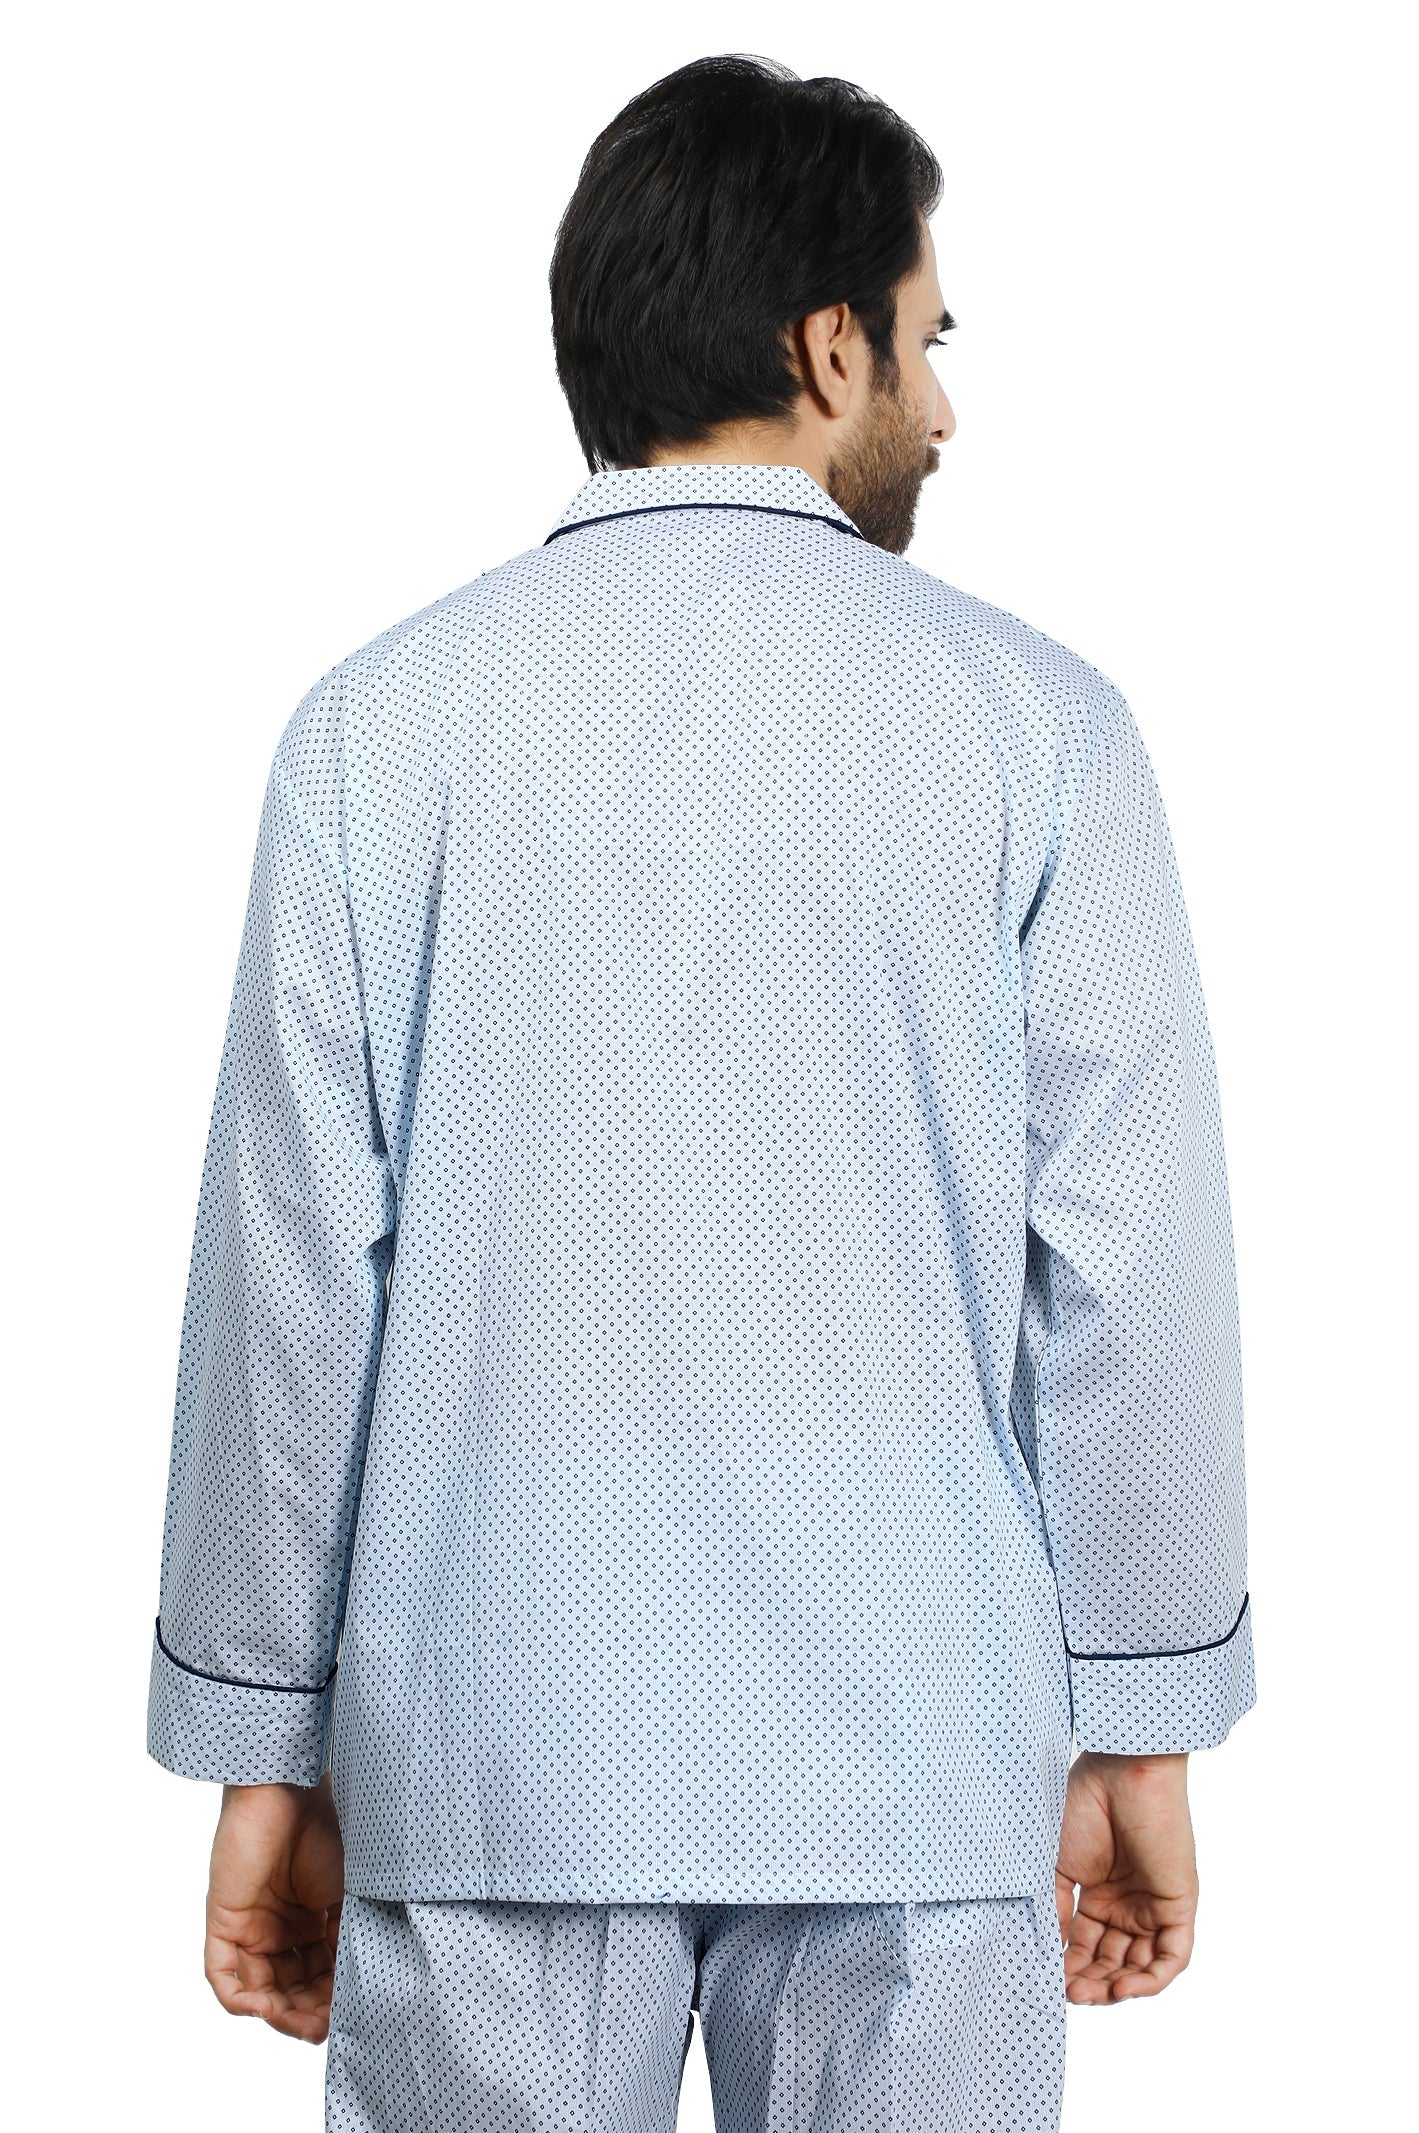 Diner's Night Suit for Men SKU: FNS011-SKY BLUE - Diners